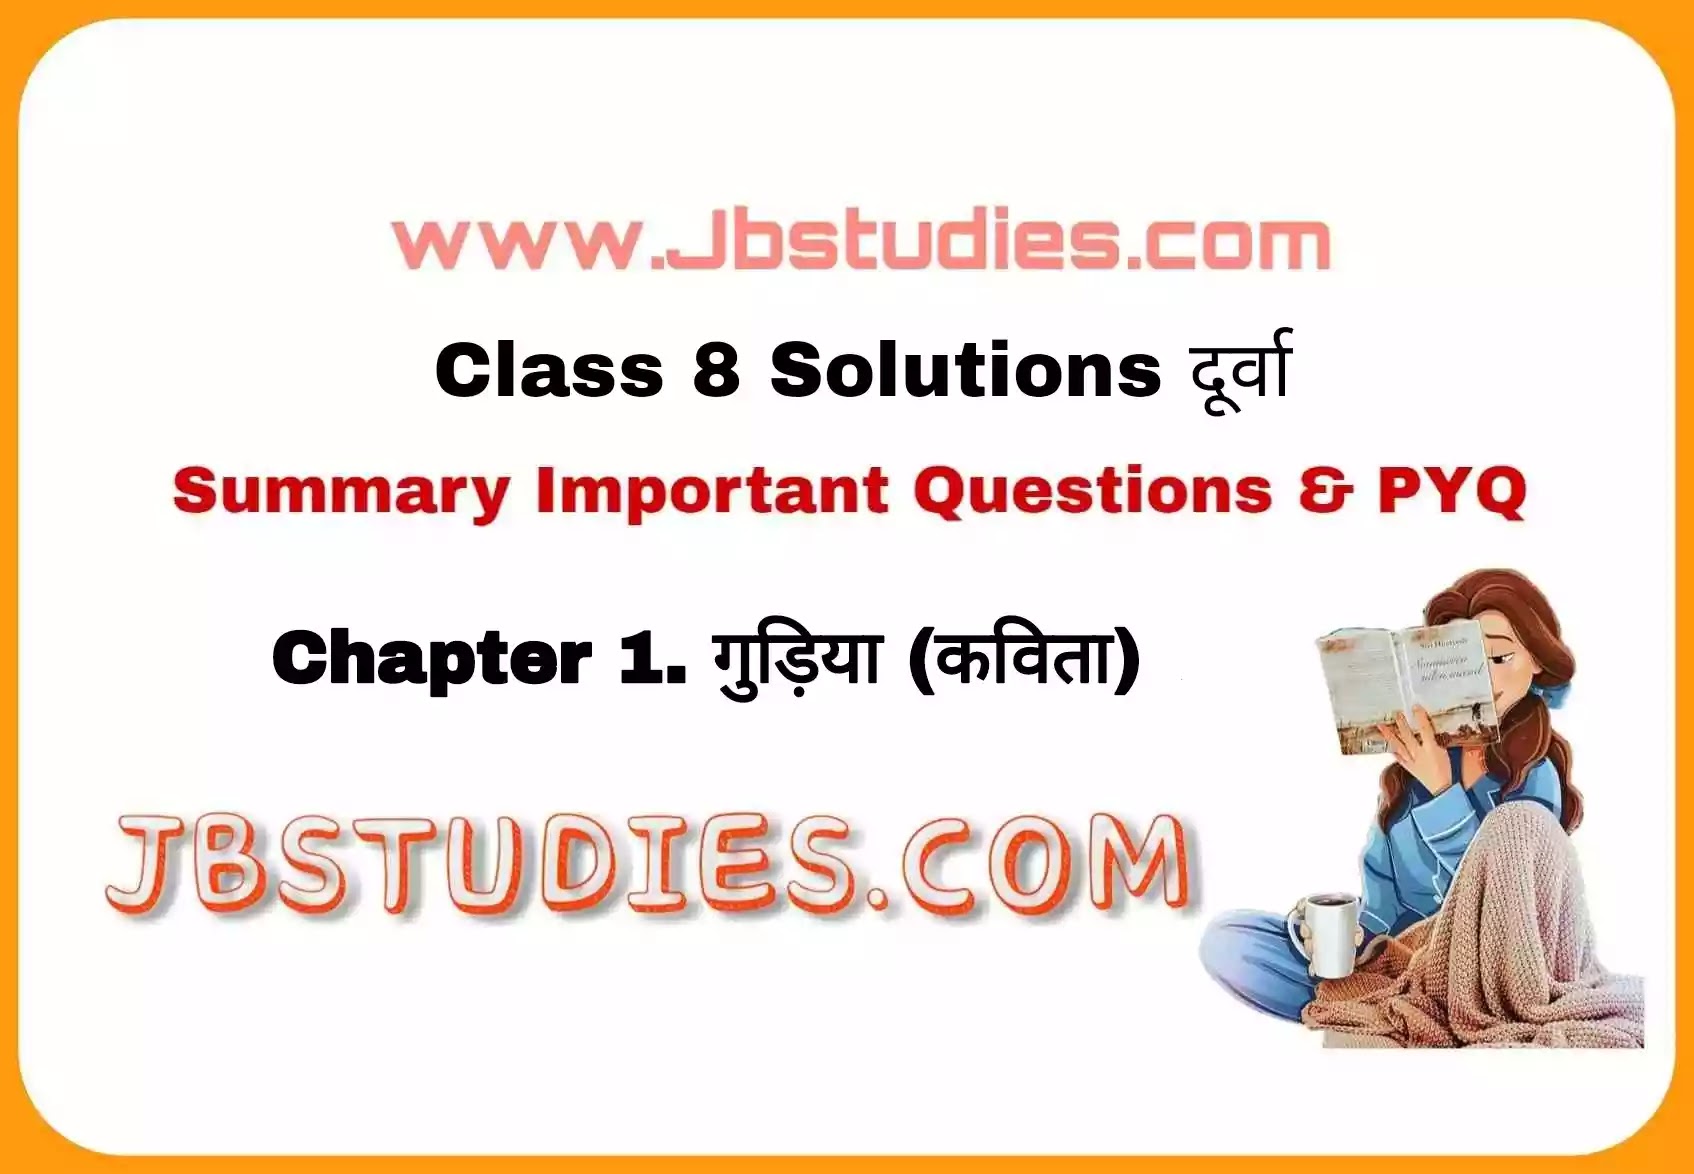 Solutions Class 8 दूर्वा Chapter-1 (गुड़िया (कविता)